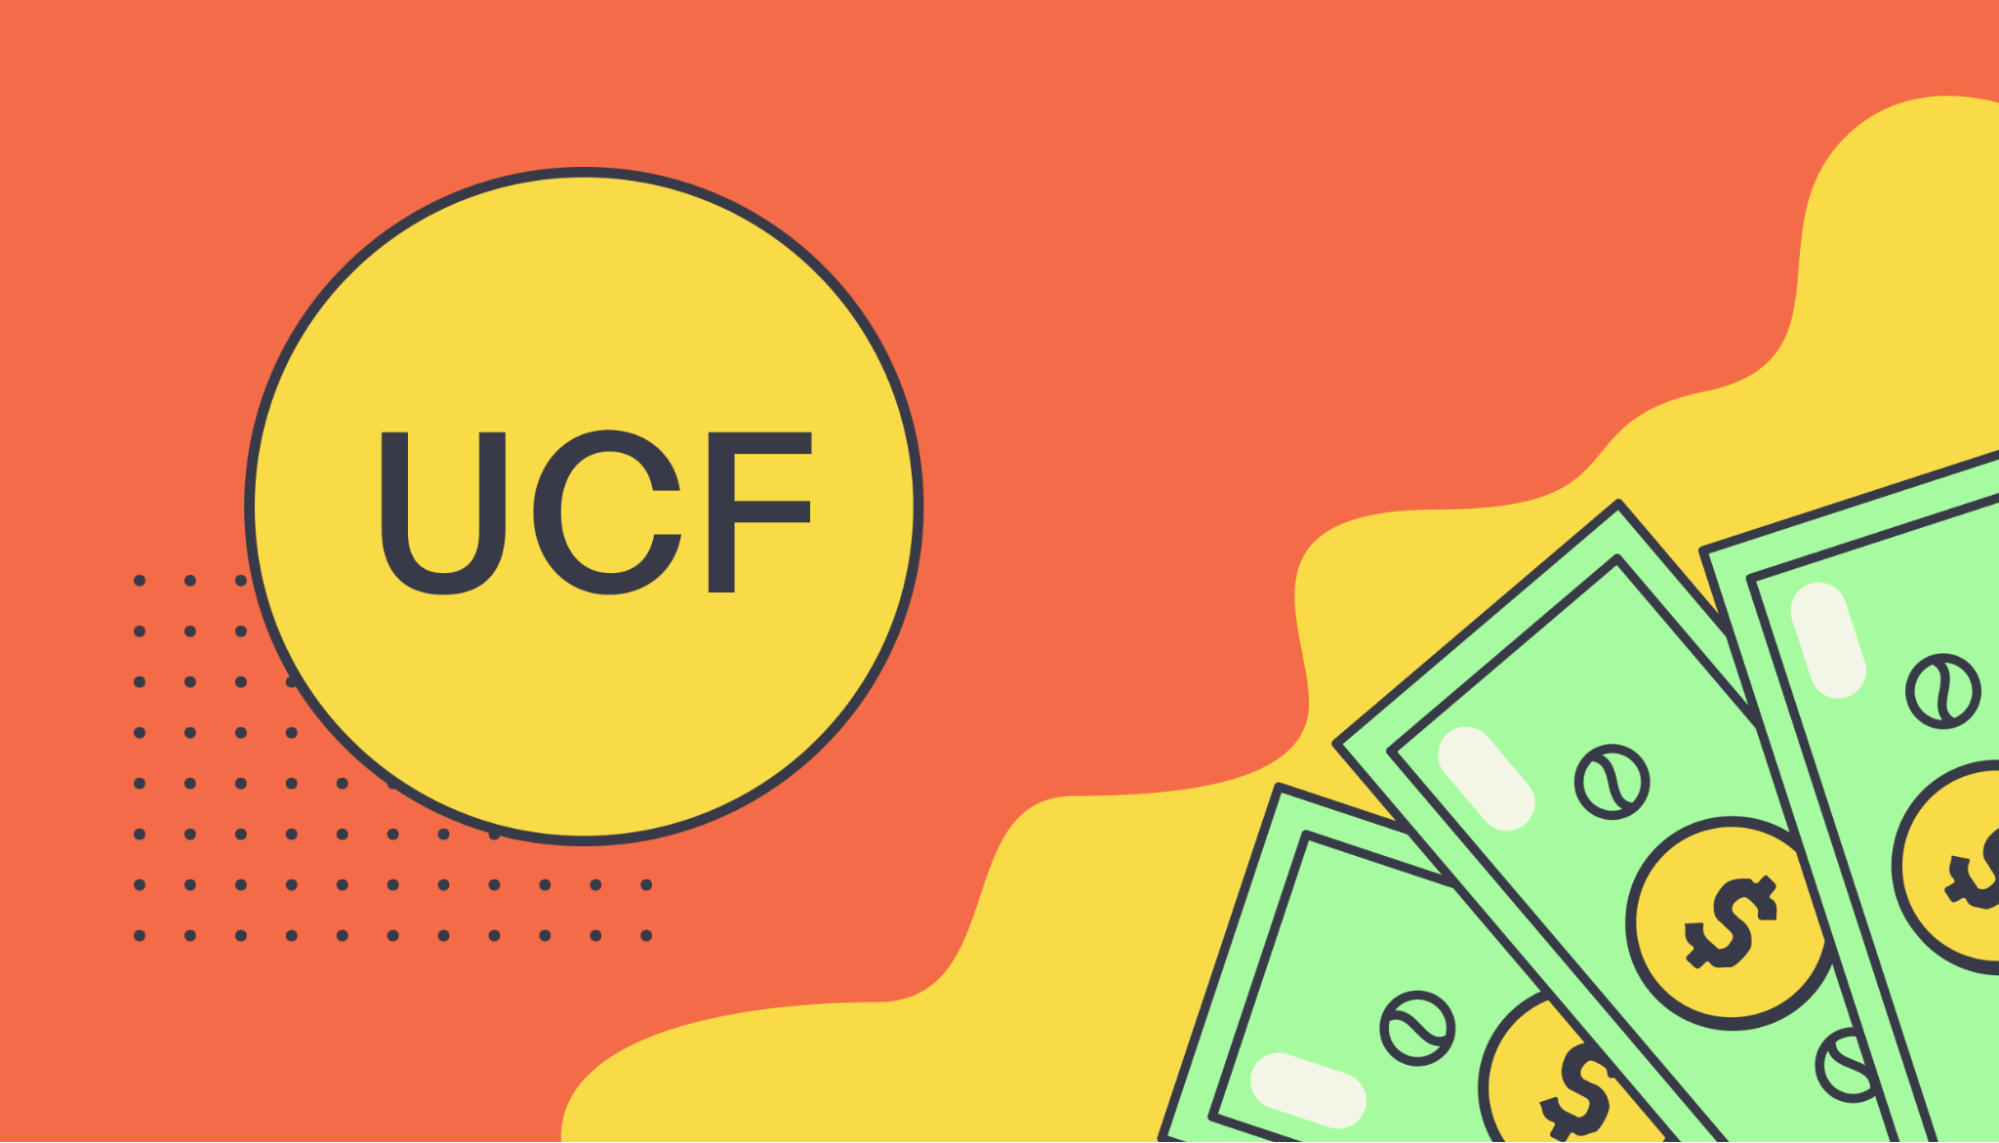 UCF financial aid